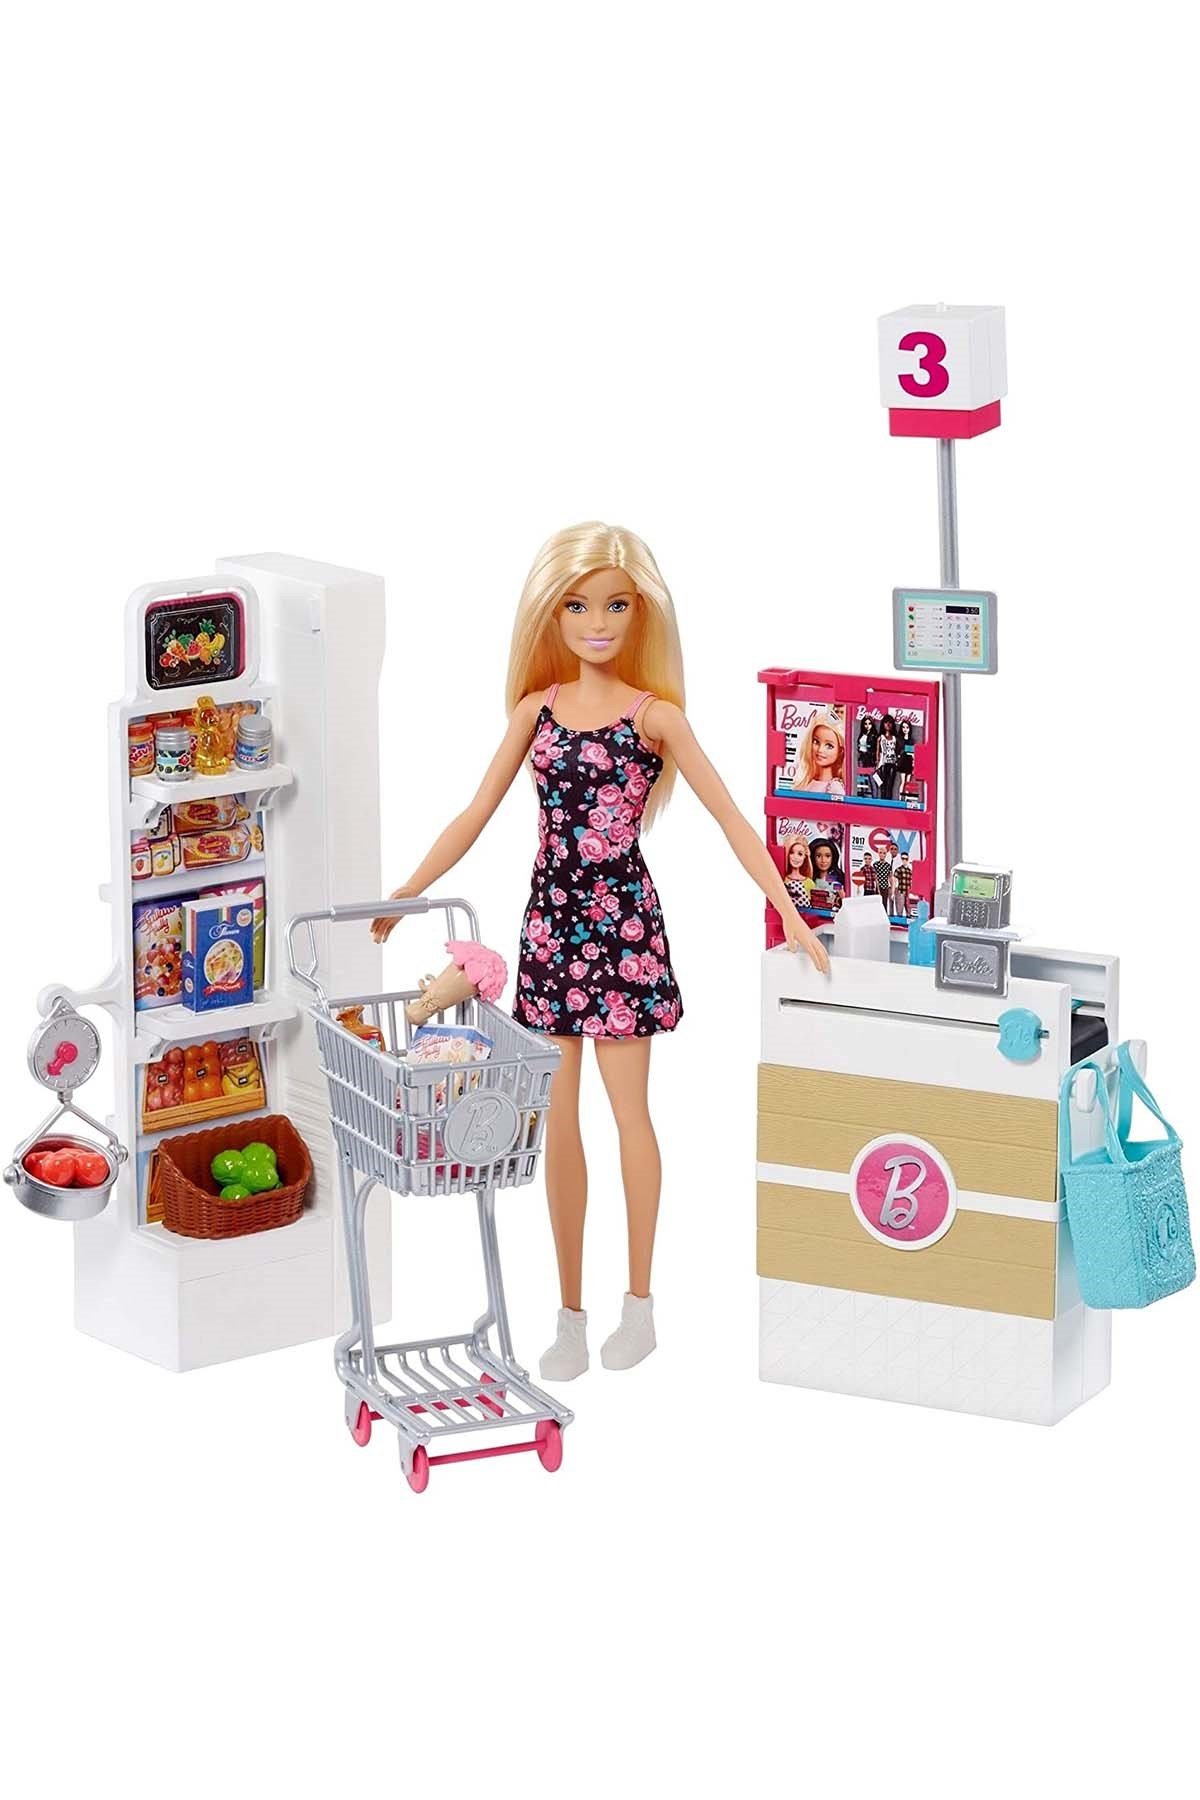 Barbie Süpermarkette Oyun Seti